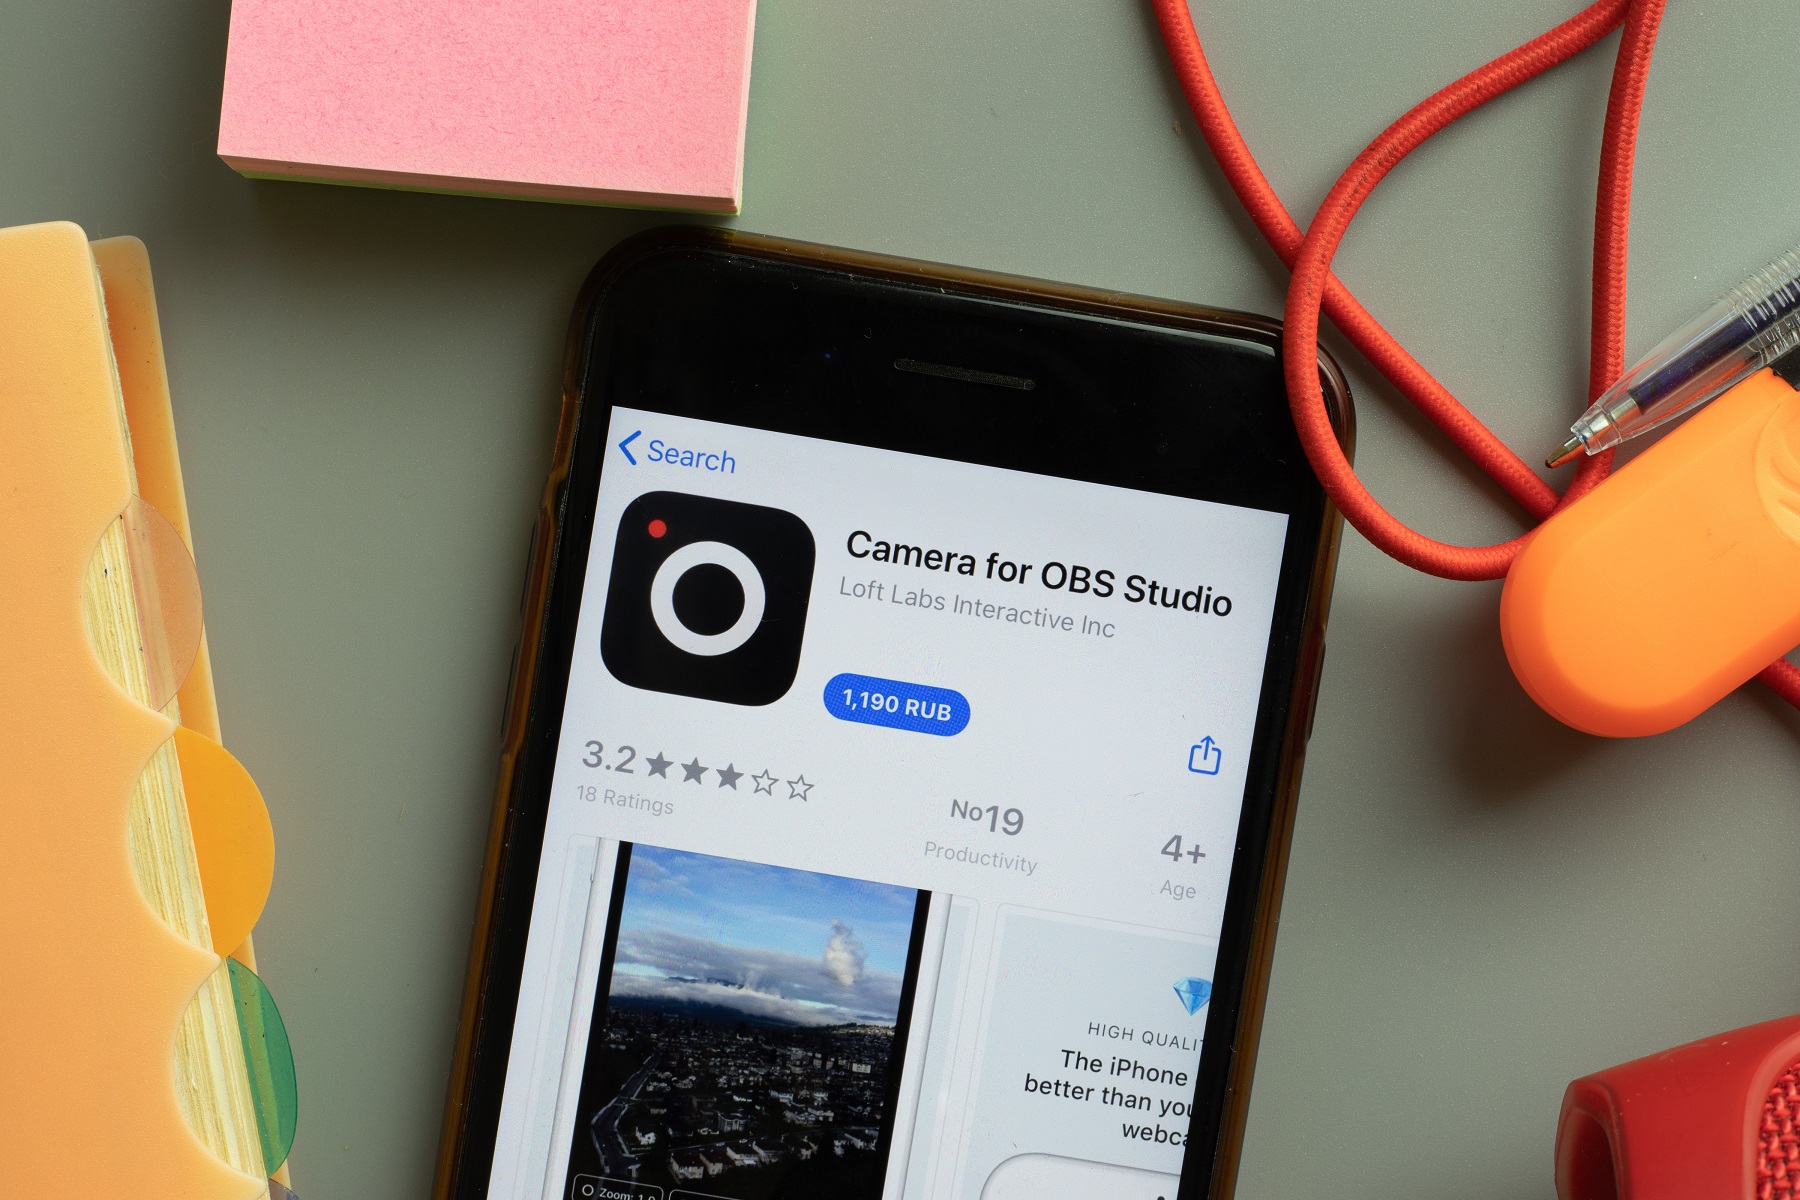 OBS Studioのアプリインストールの画像が映っているスマホ